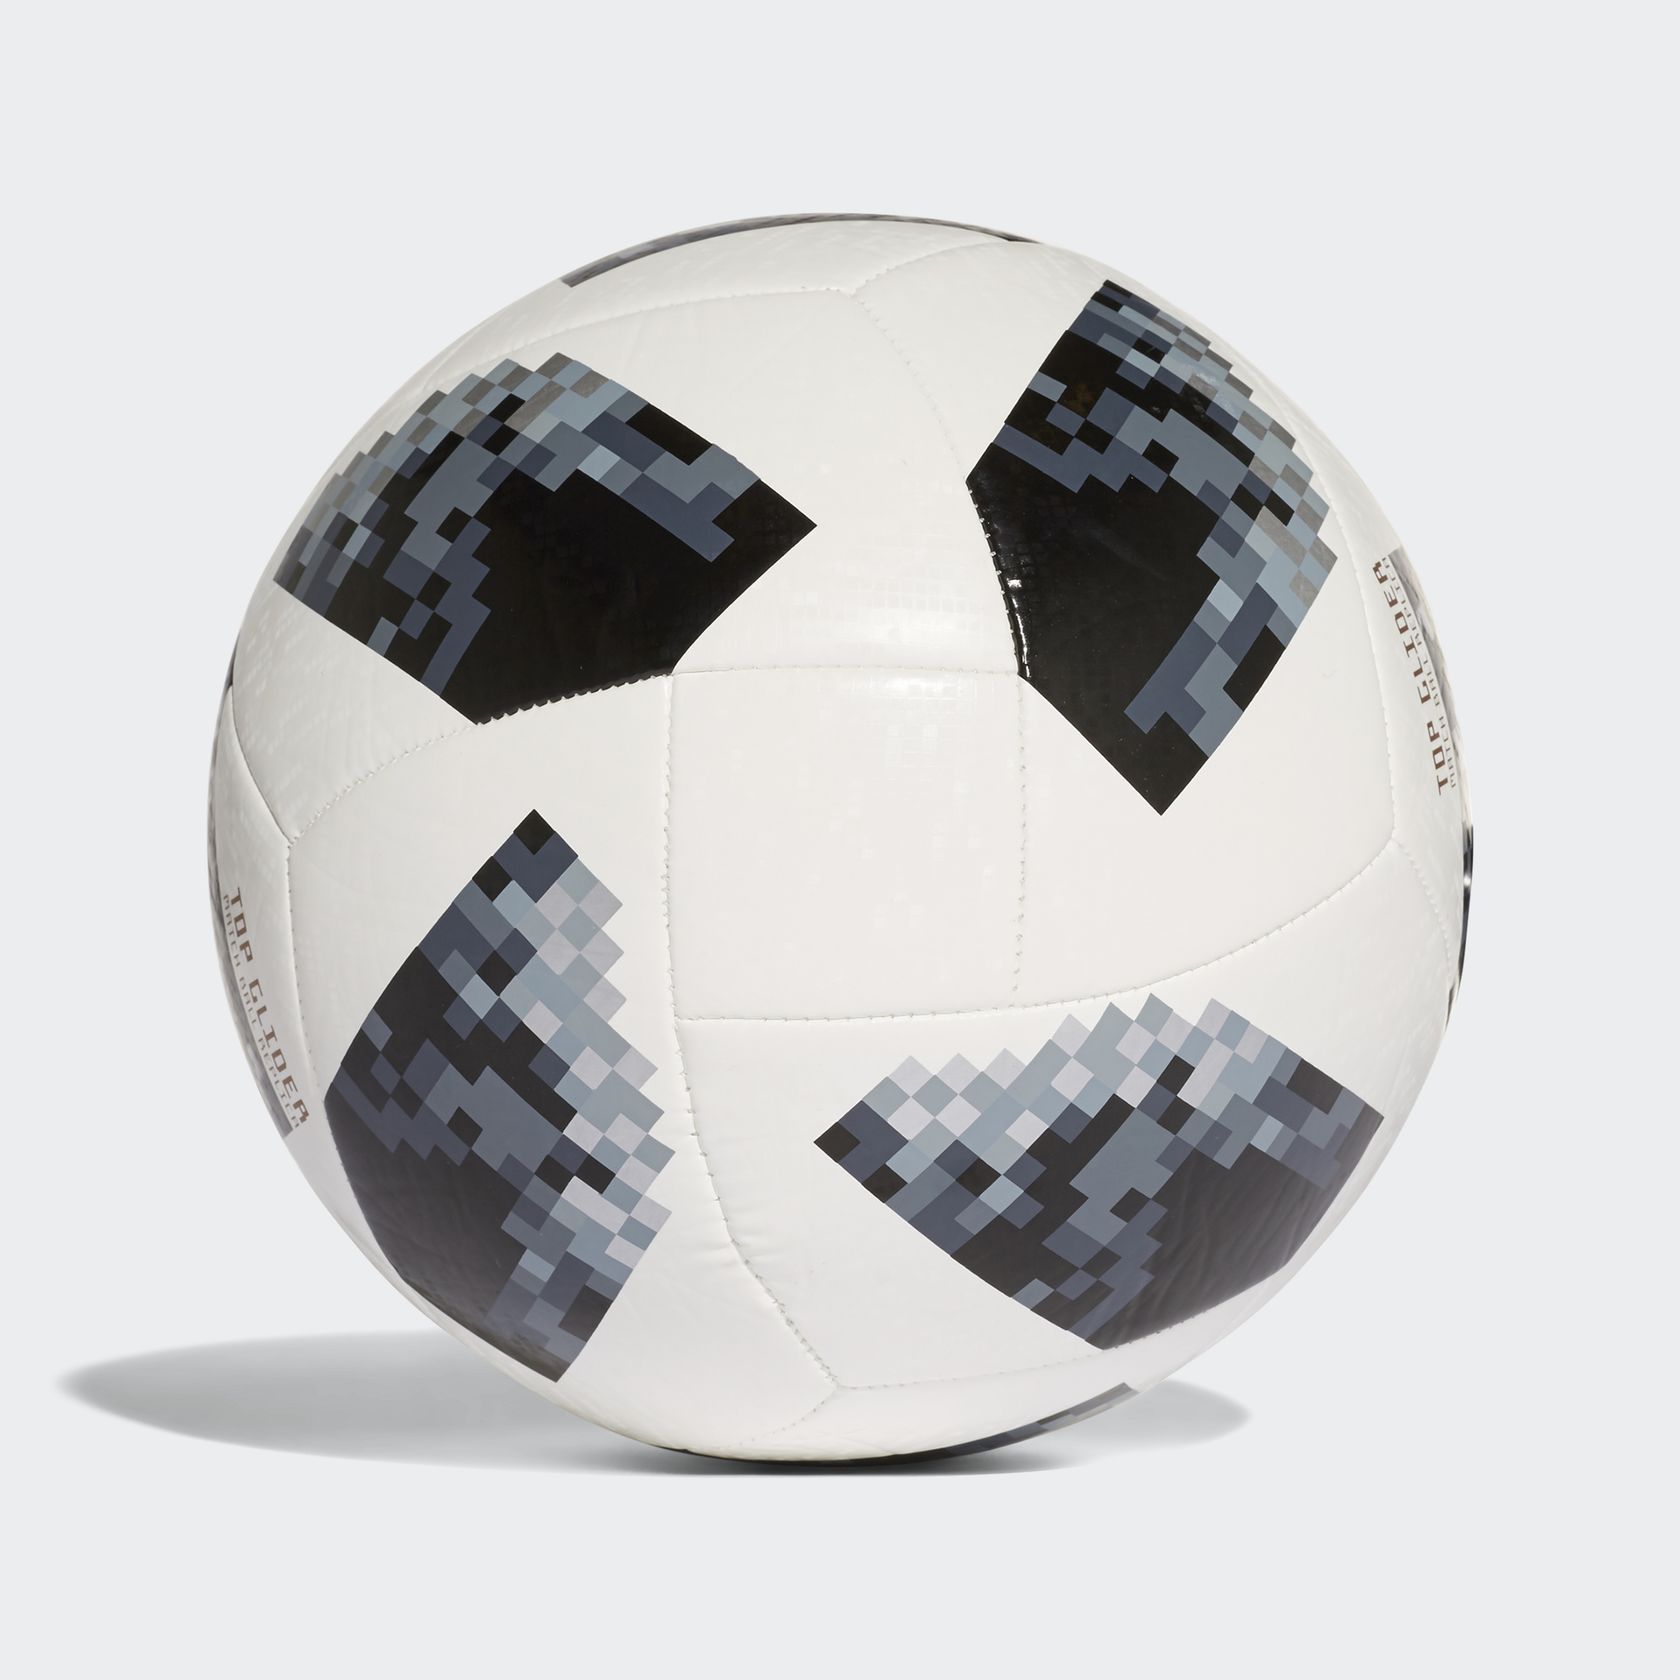 world cup glider ball